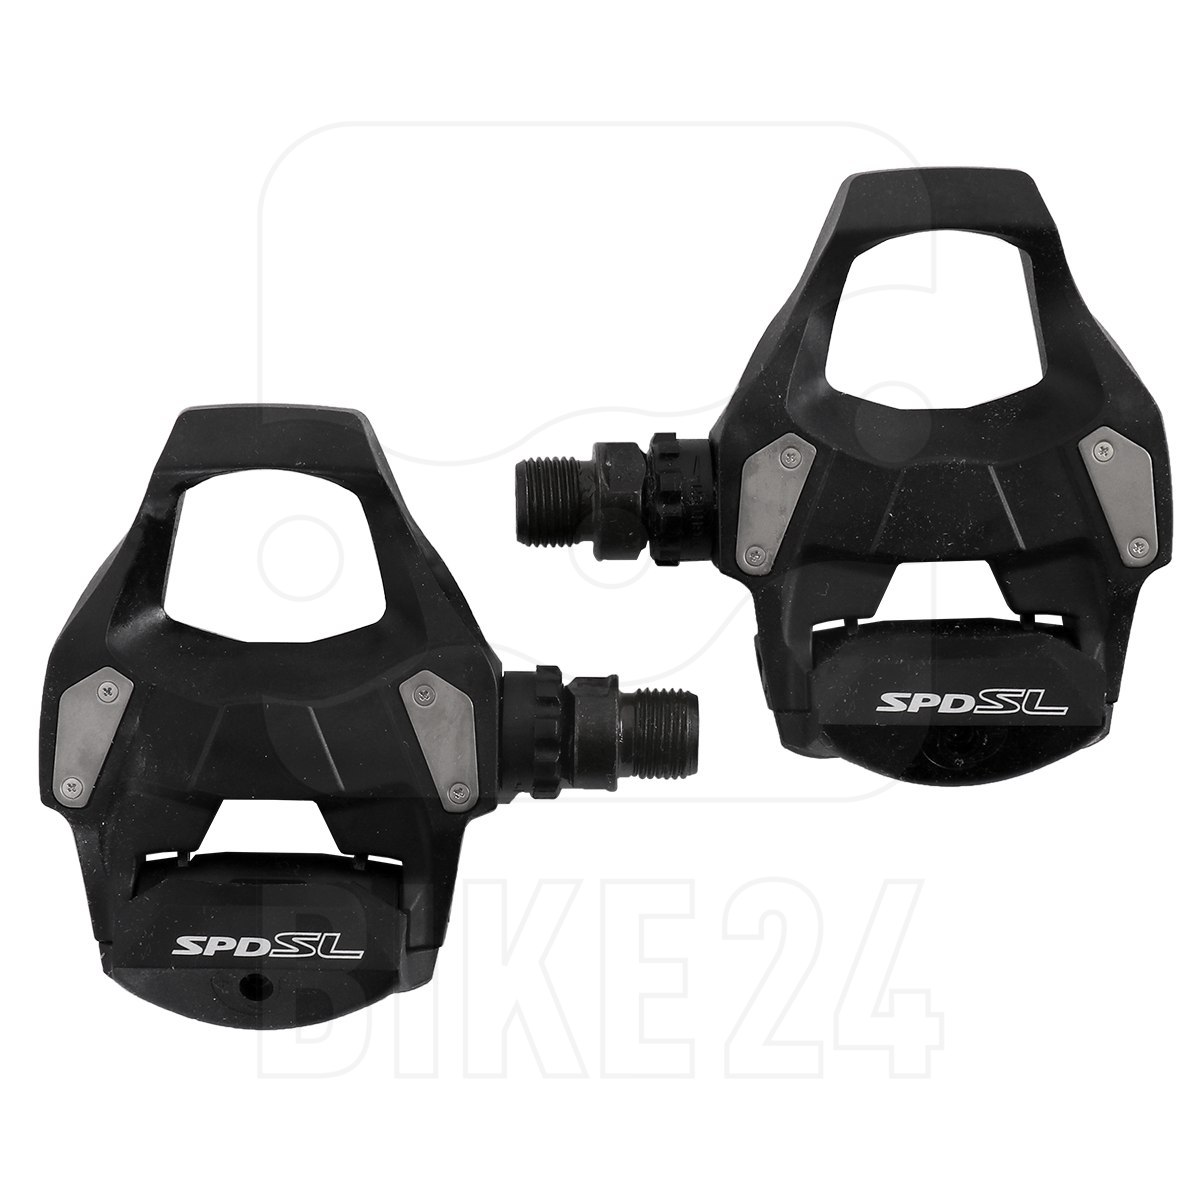 Produktbild von Shimano PD-RS500 SPD-SL Pedal